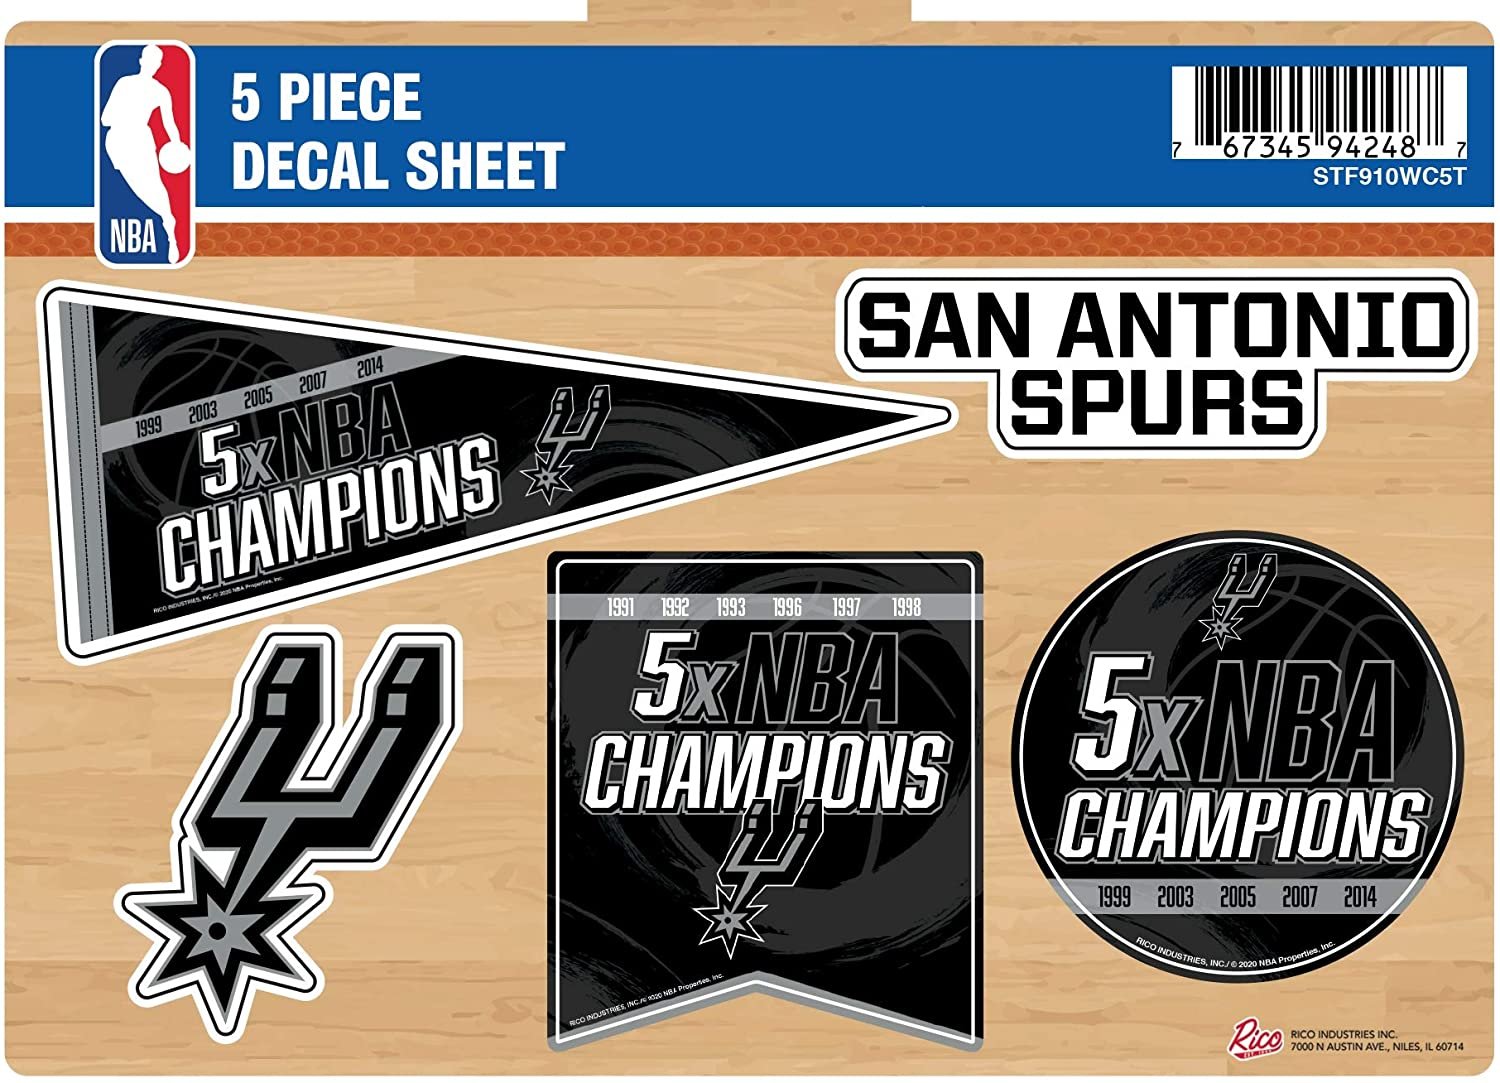 San Antonio Spurs Decal Sticker 5X Time Champions 5 Piece Multi Sheet Flat Vinyl Emblem Basketball